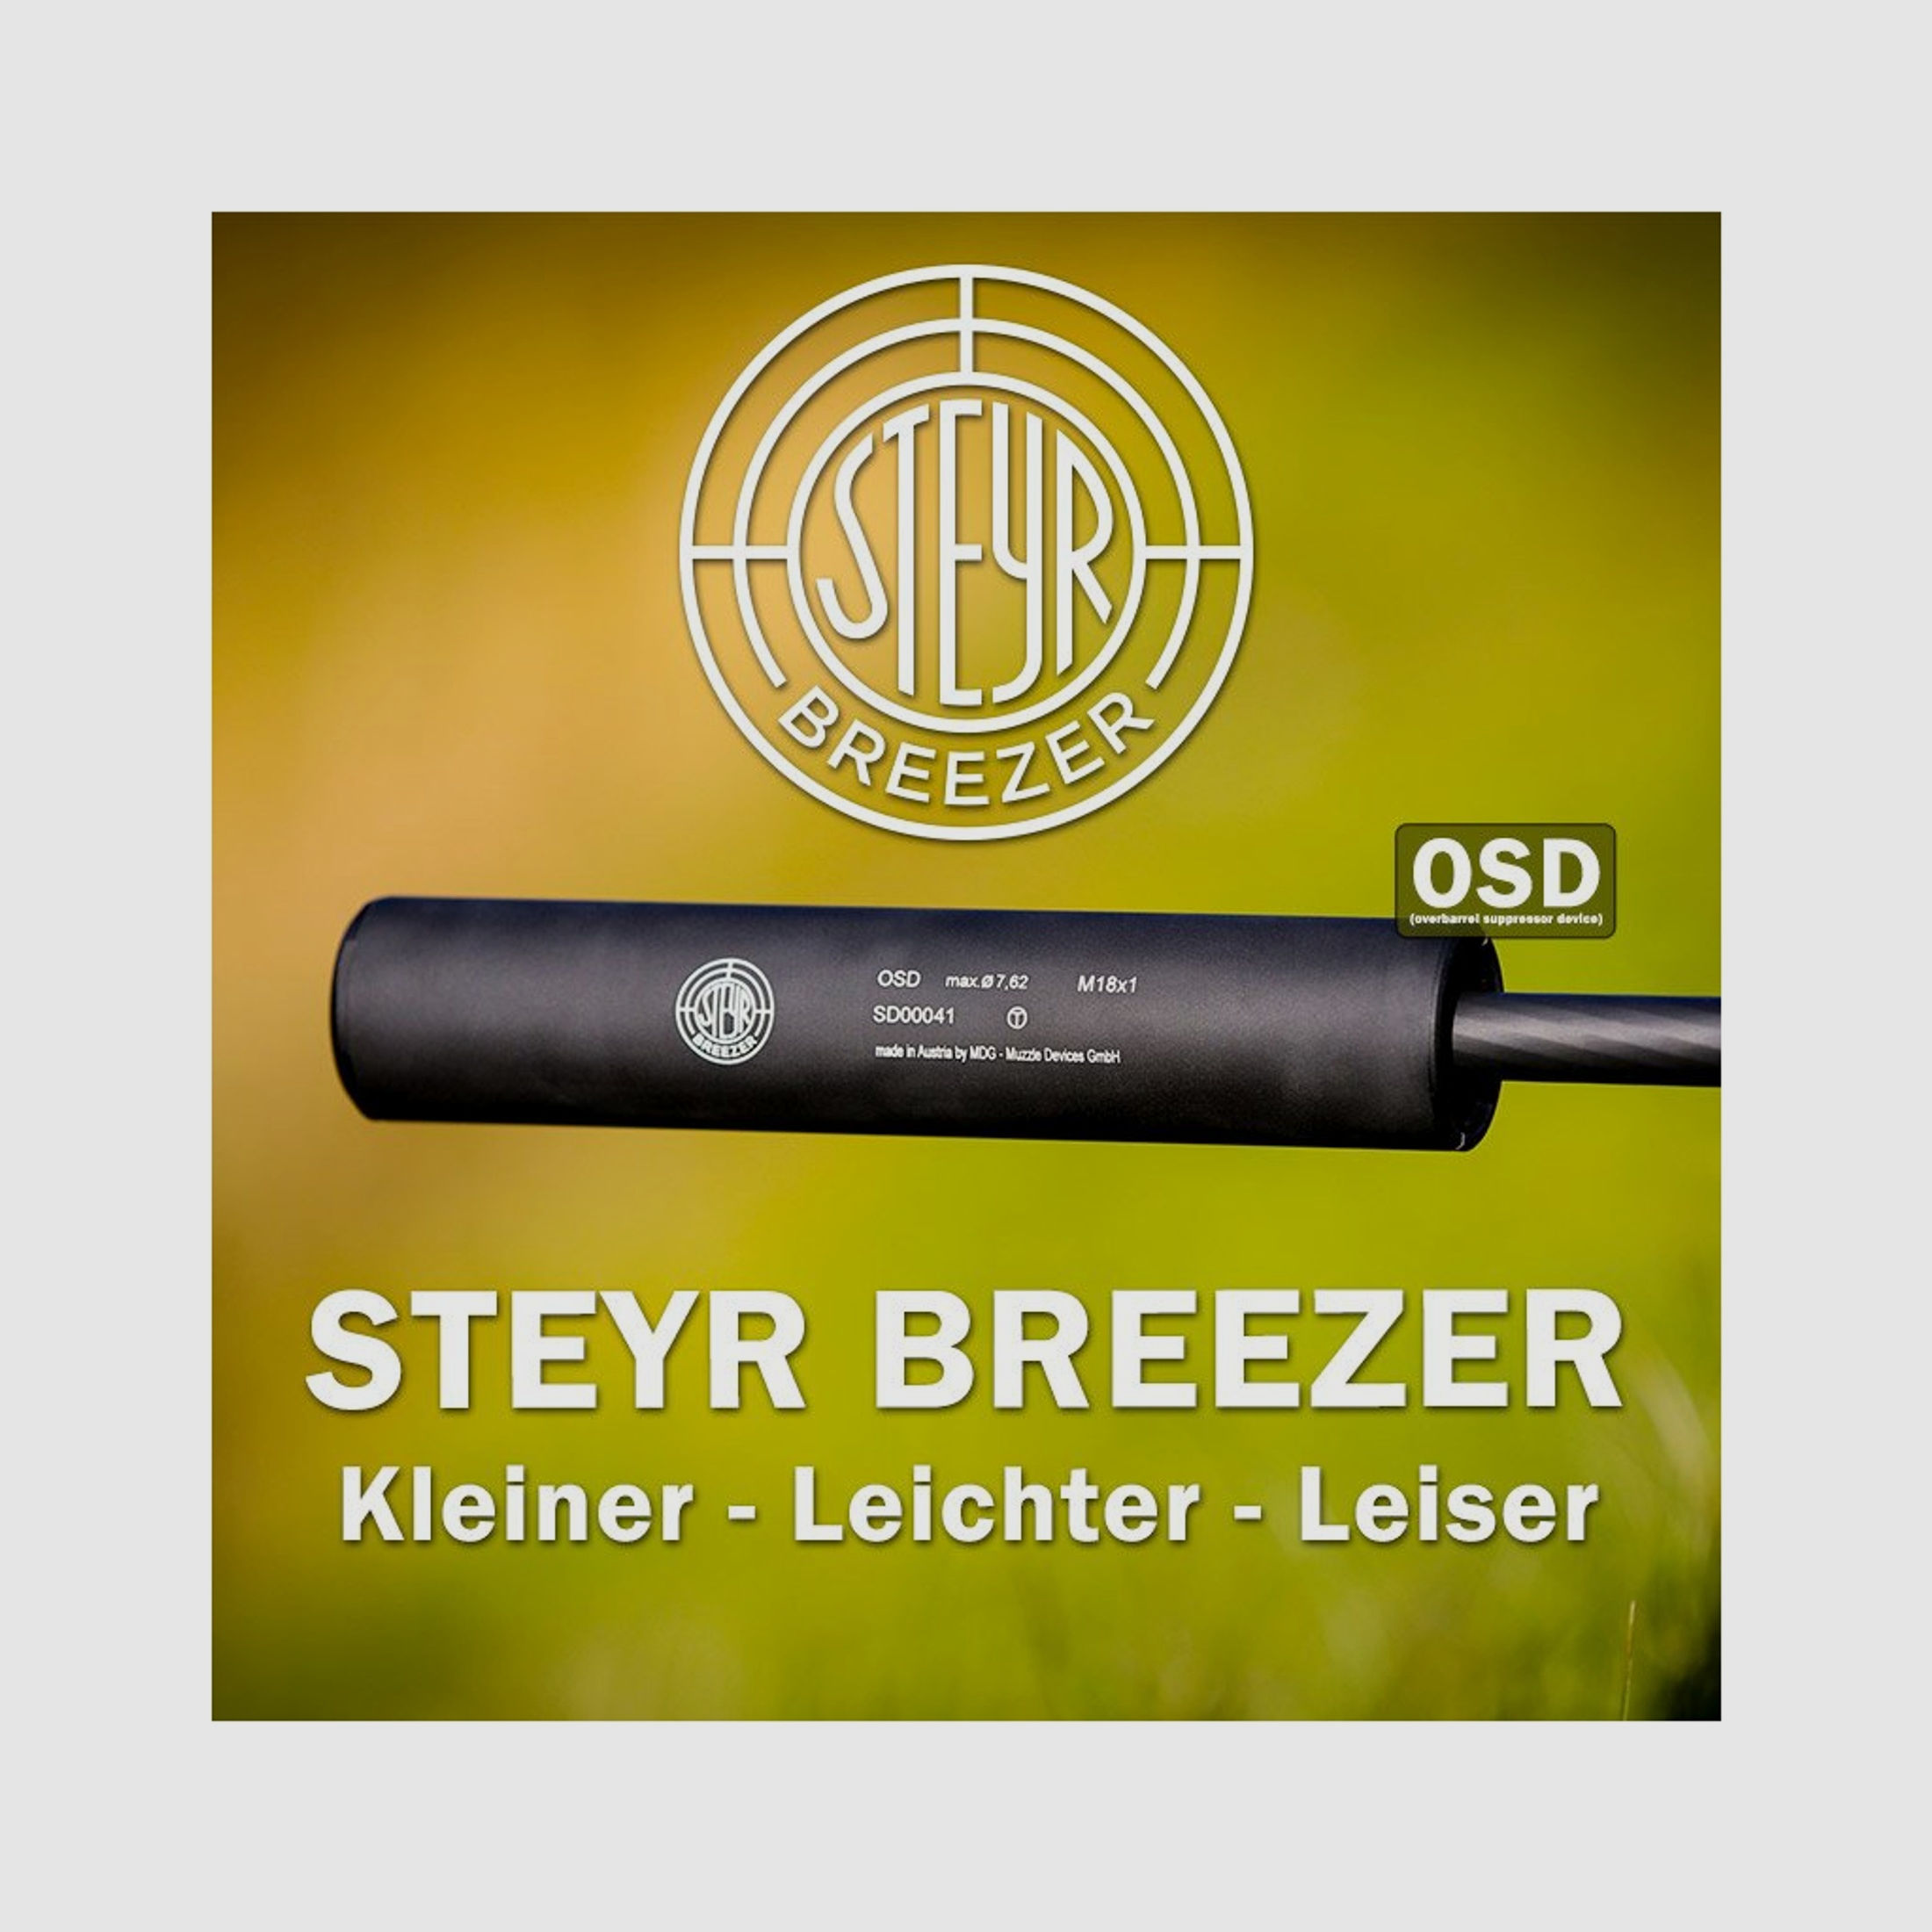 STEYR Breezer OSD HB